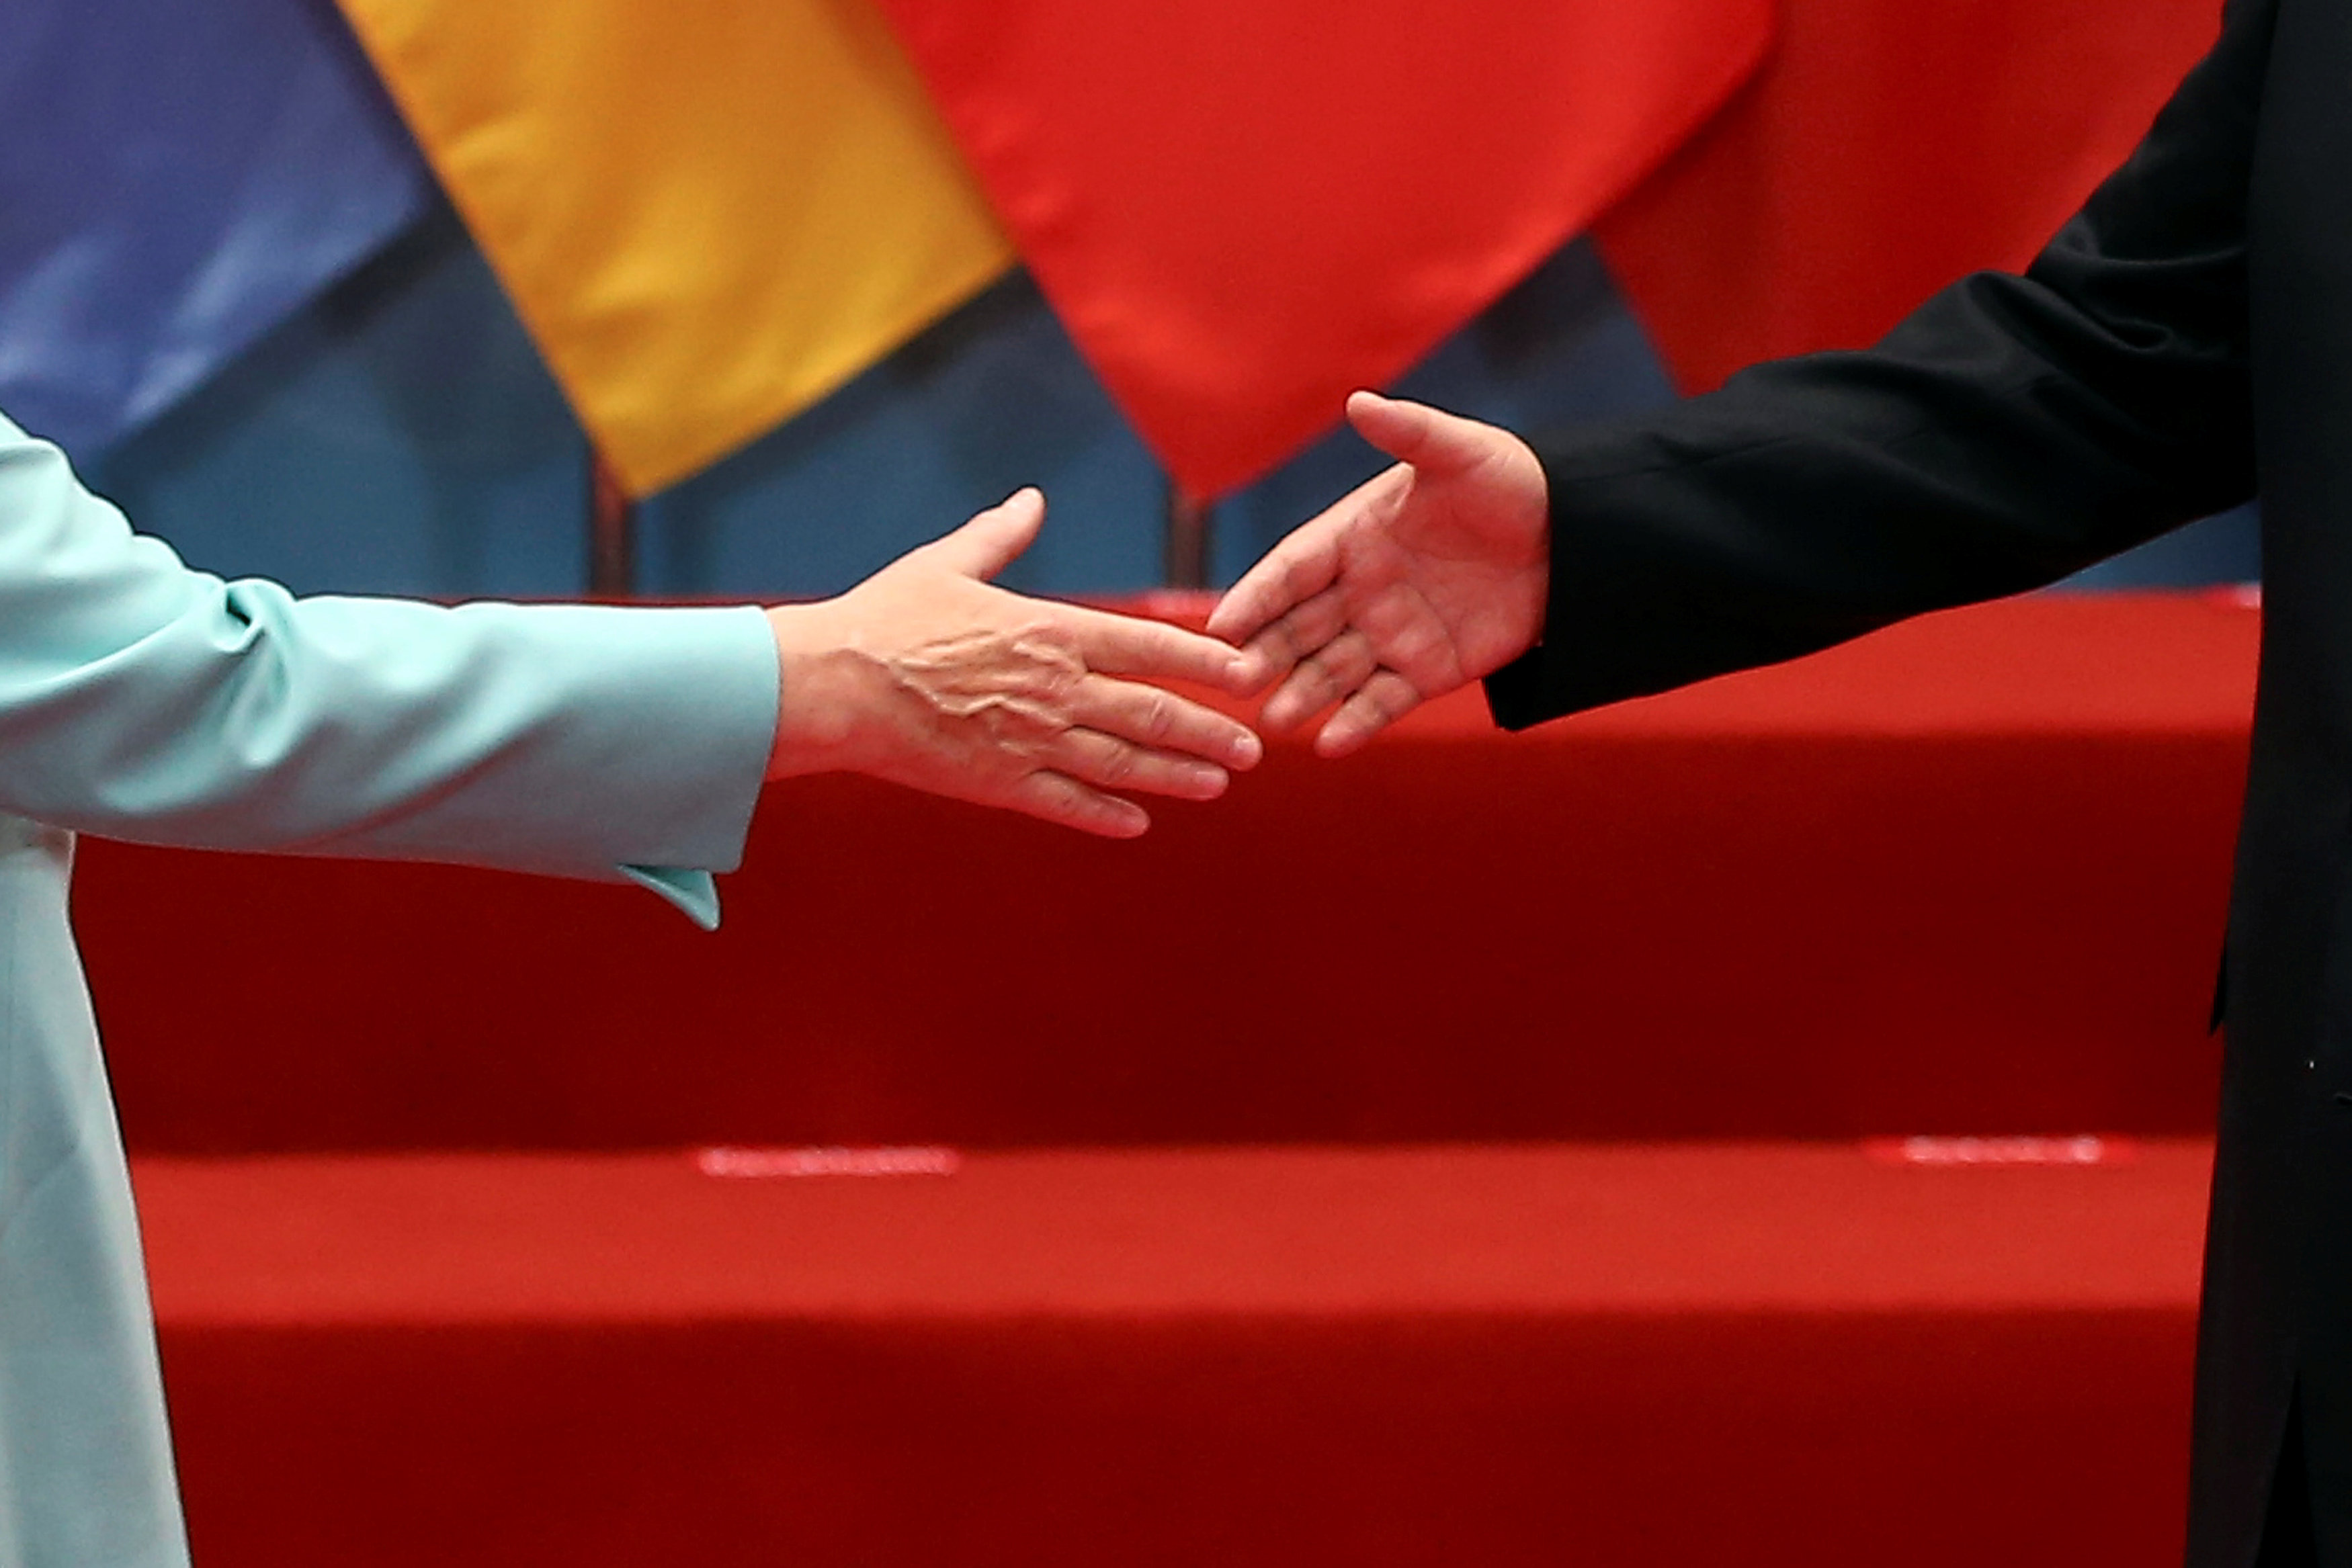 Germany's Merkel has "constructive" bilateral meeting with Erdogan